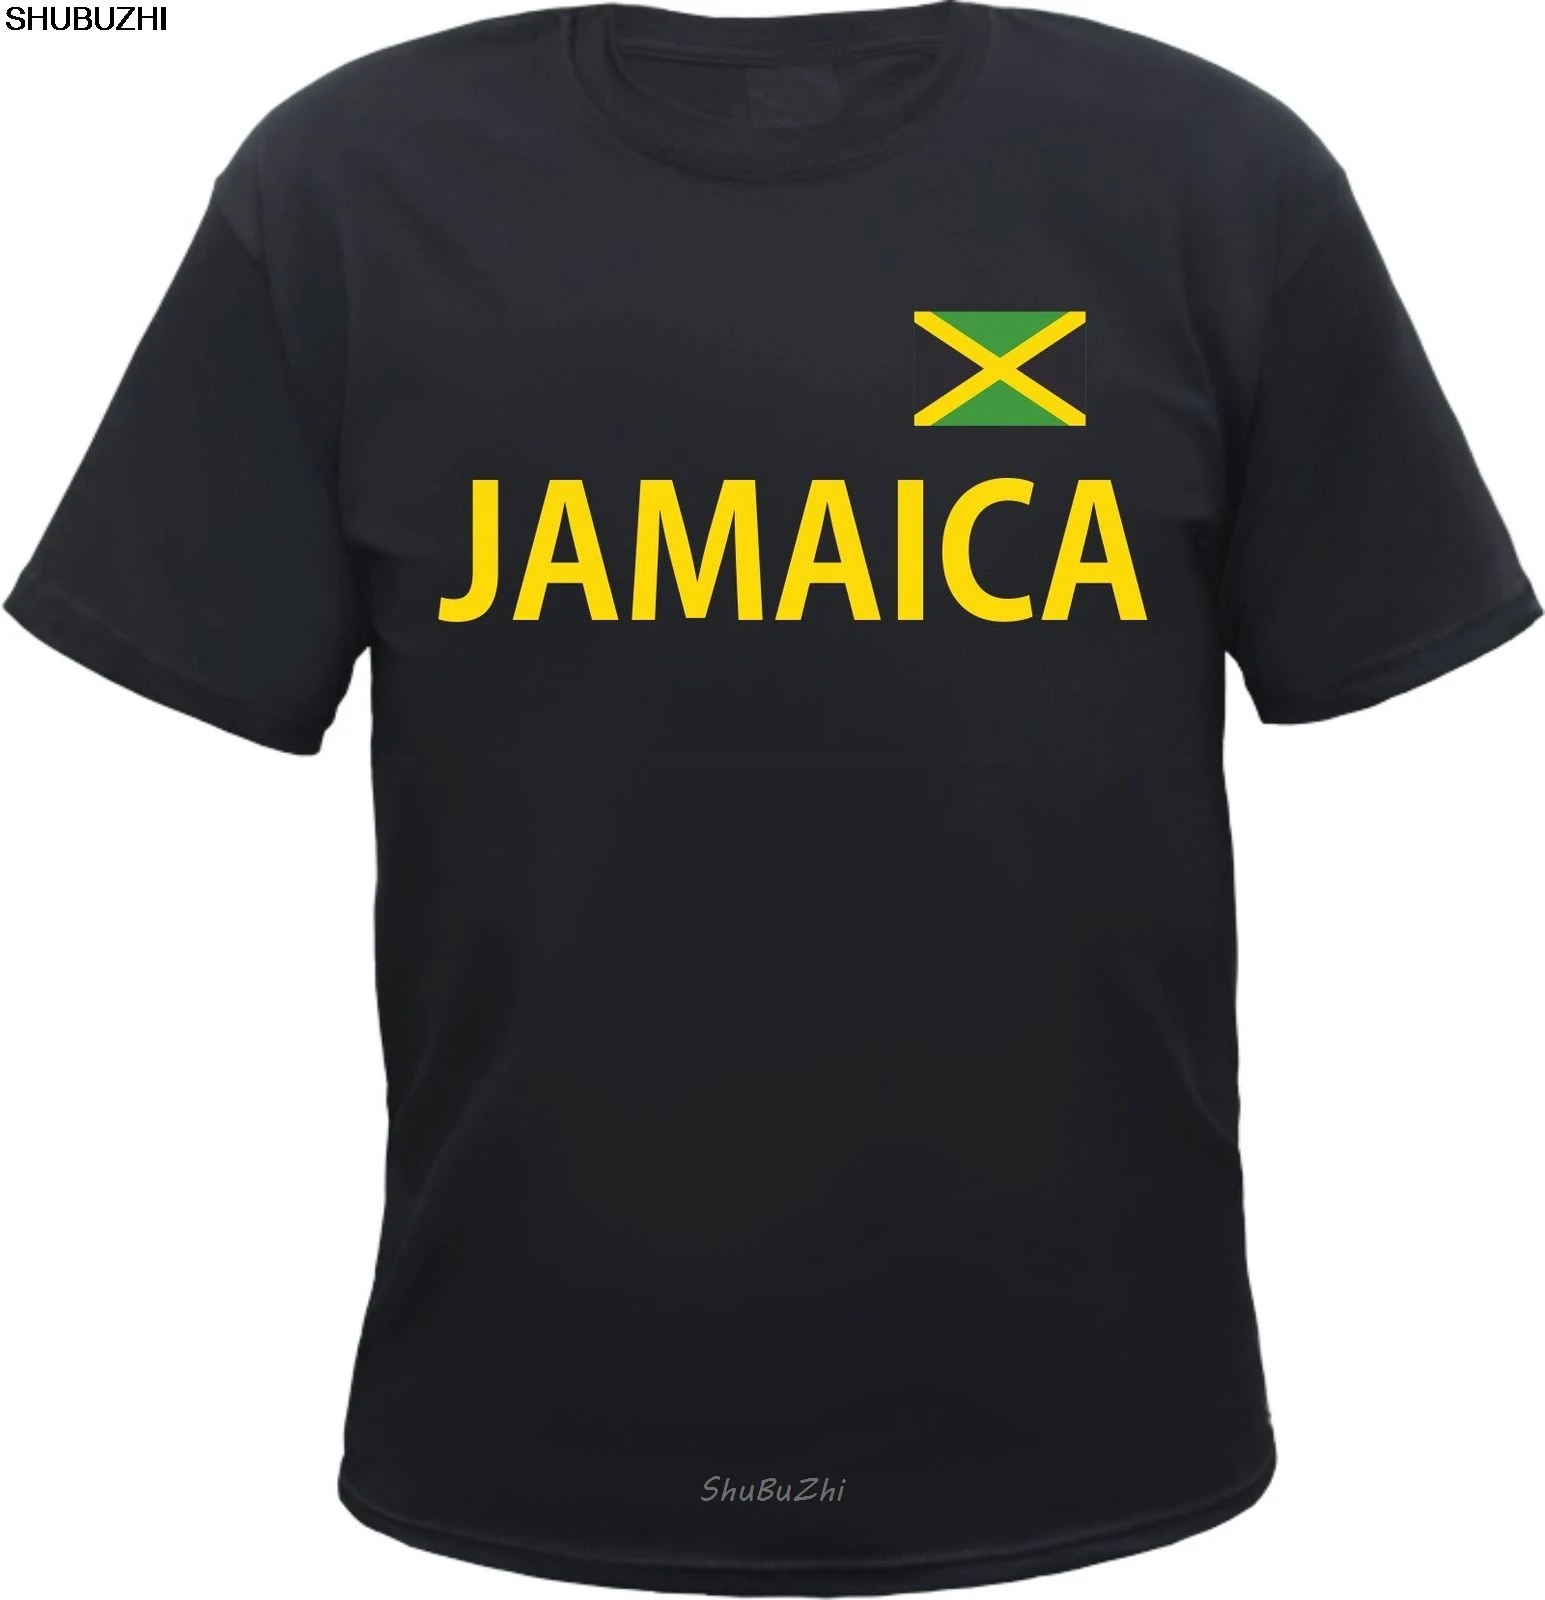 JAMAICA Футболка-schwarz/gelb mit Flagge-S bis 5XL-jamaica rasta reggae, хлопок, новинка, футболки sbz3537